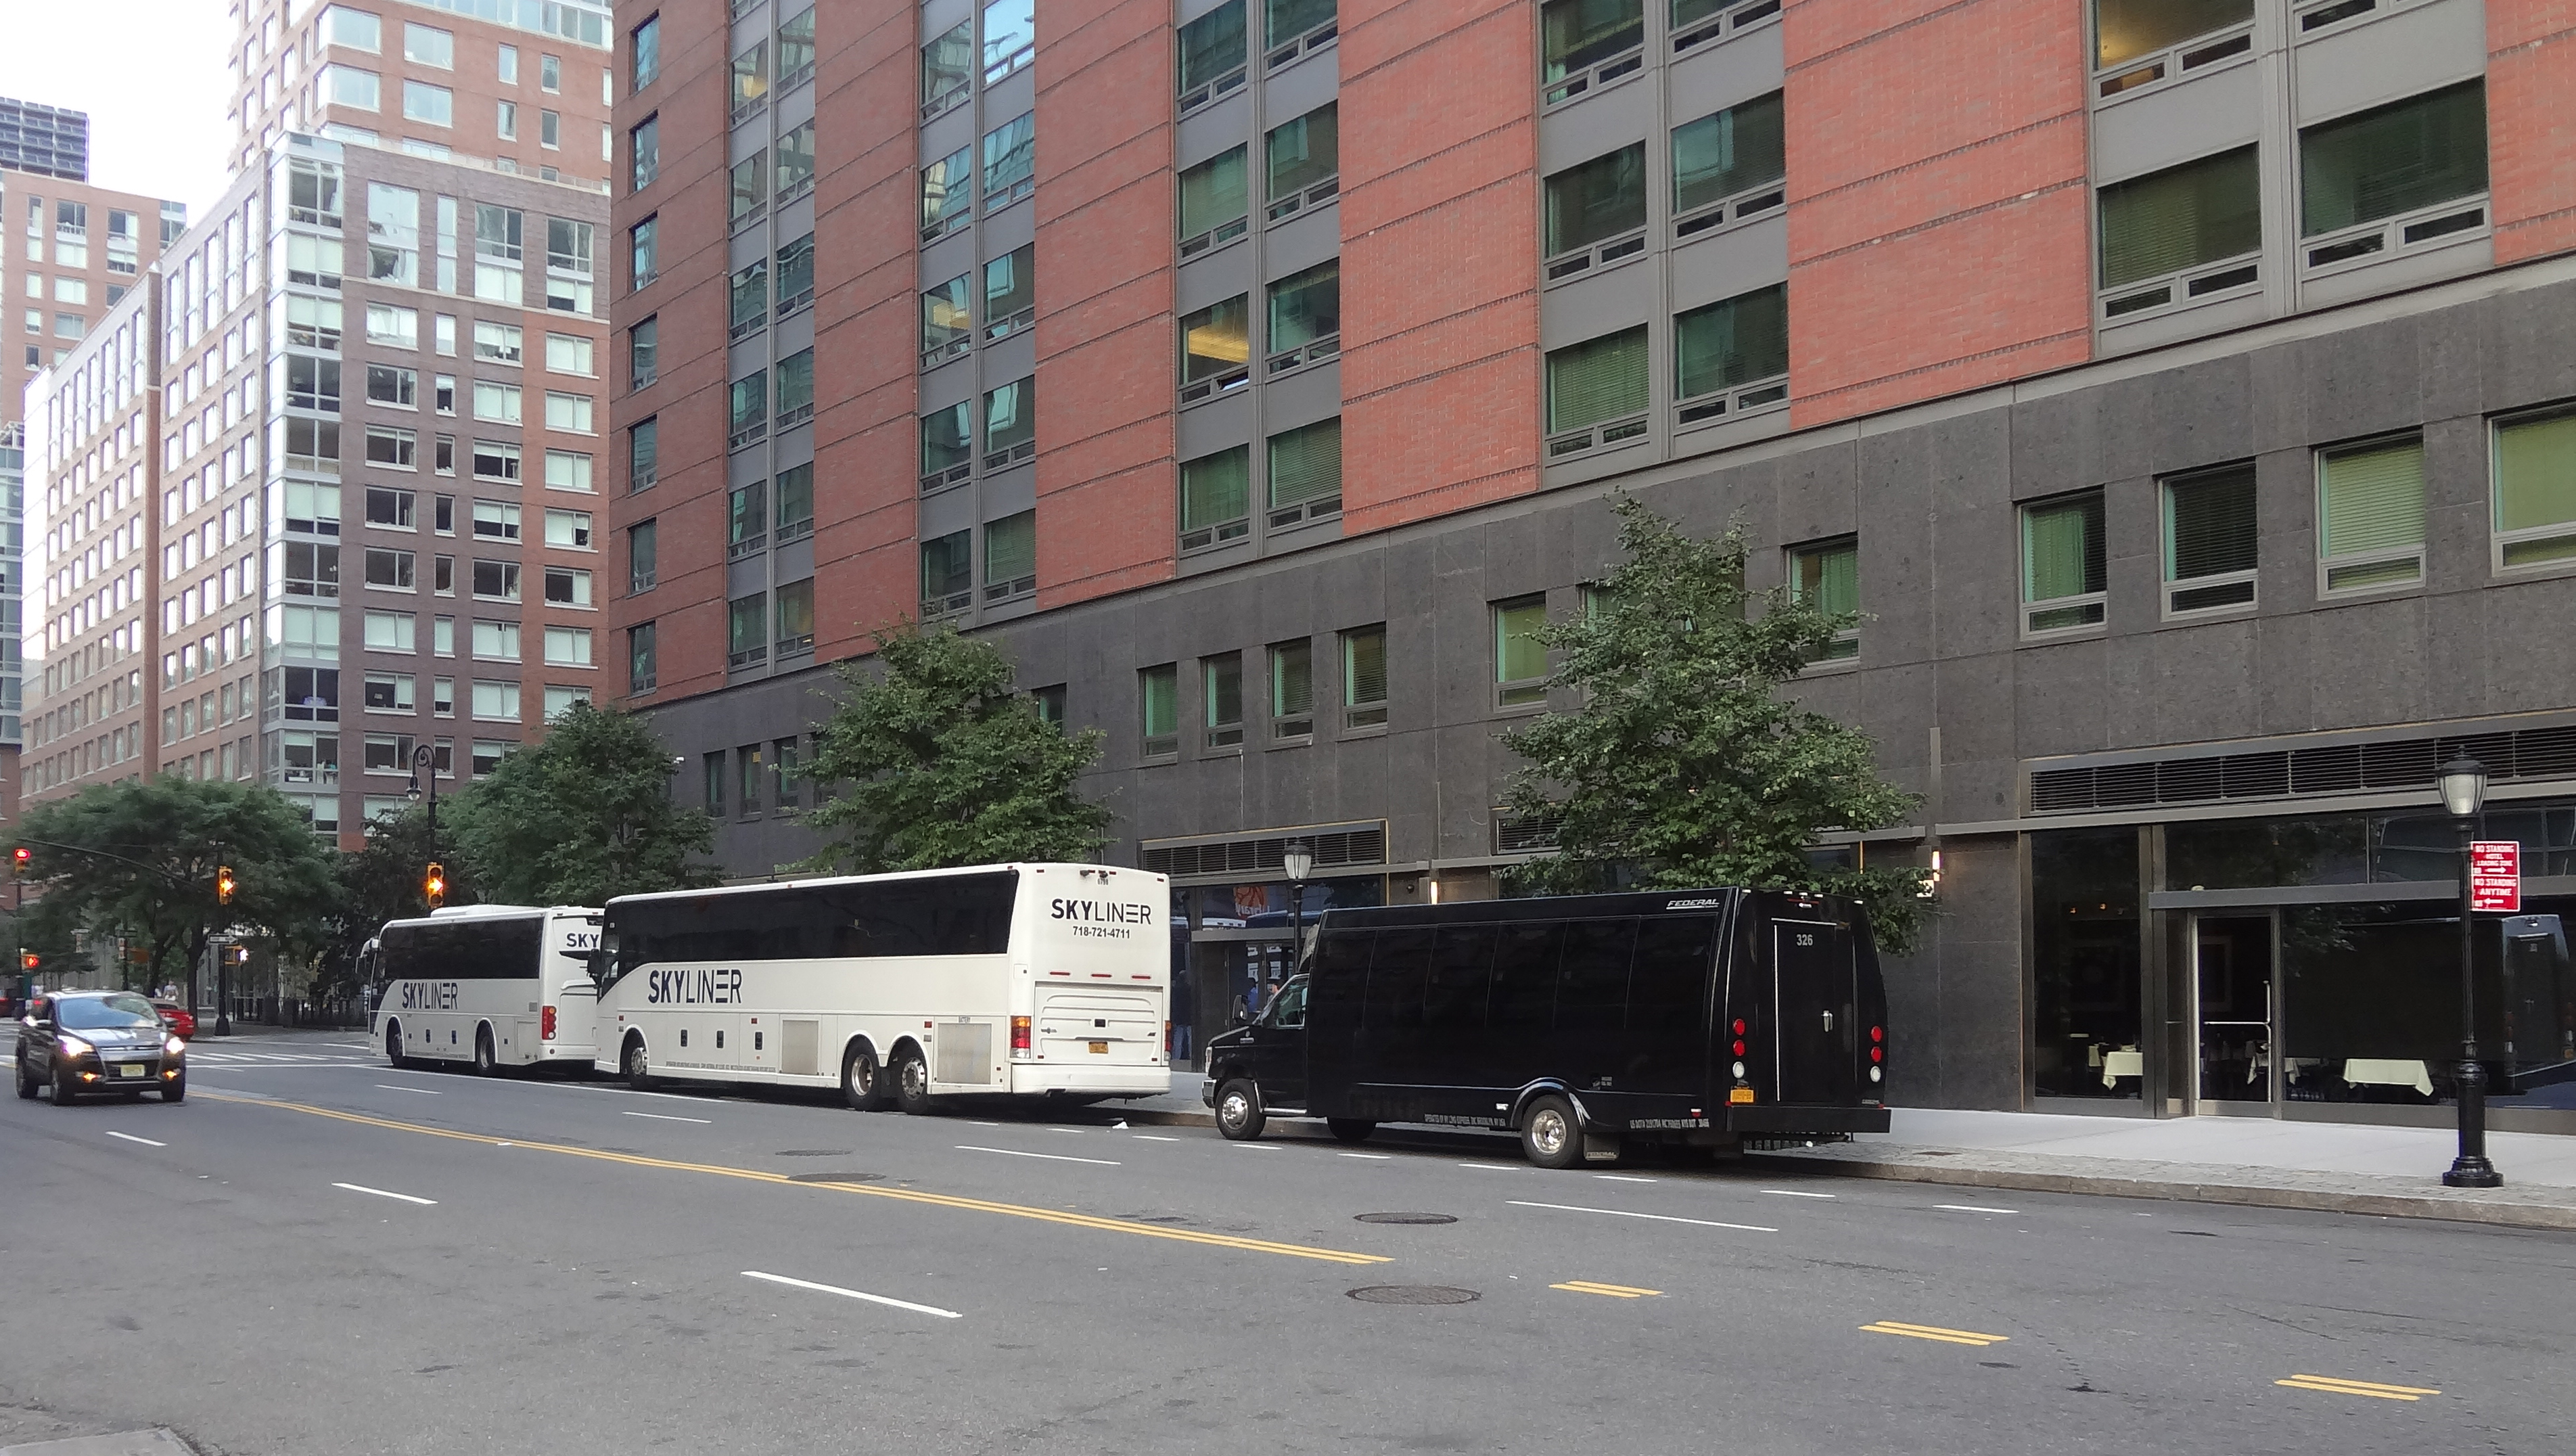 Tour buses of Conrad Hotel